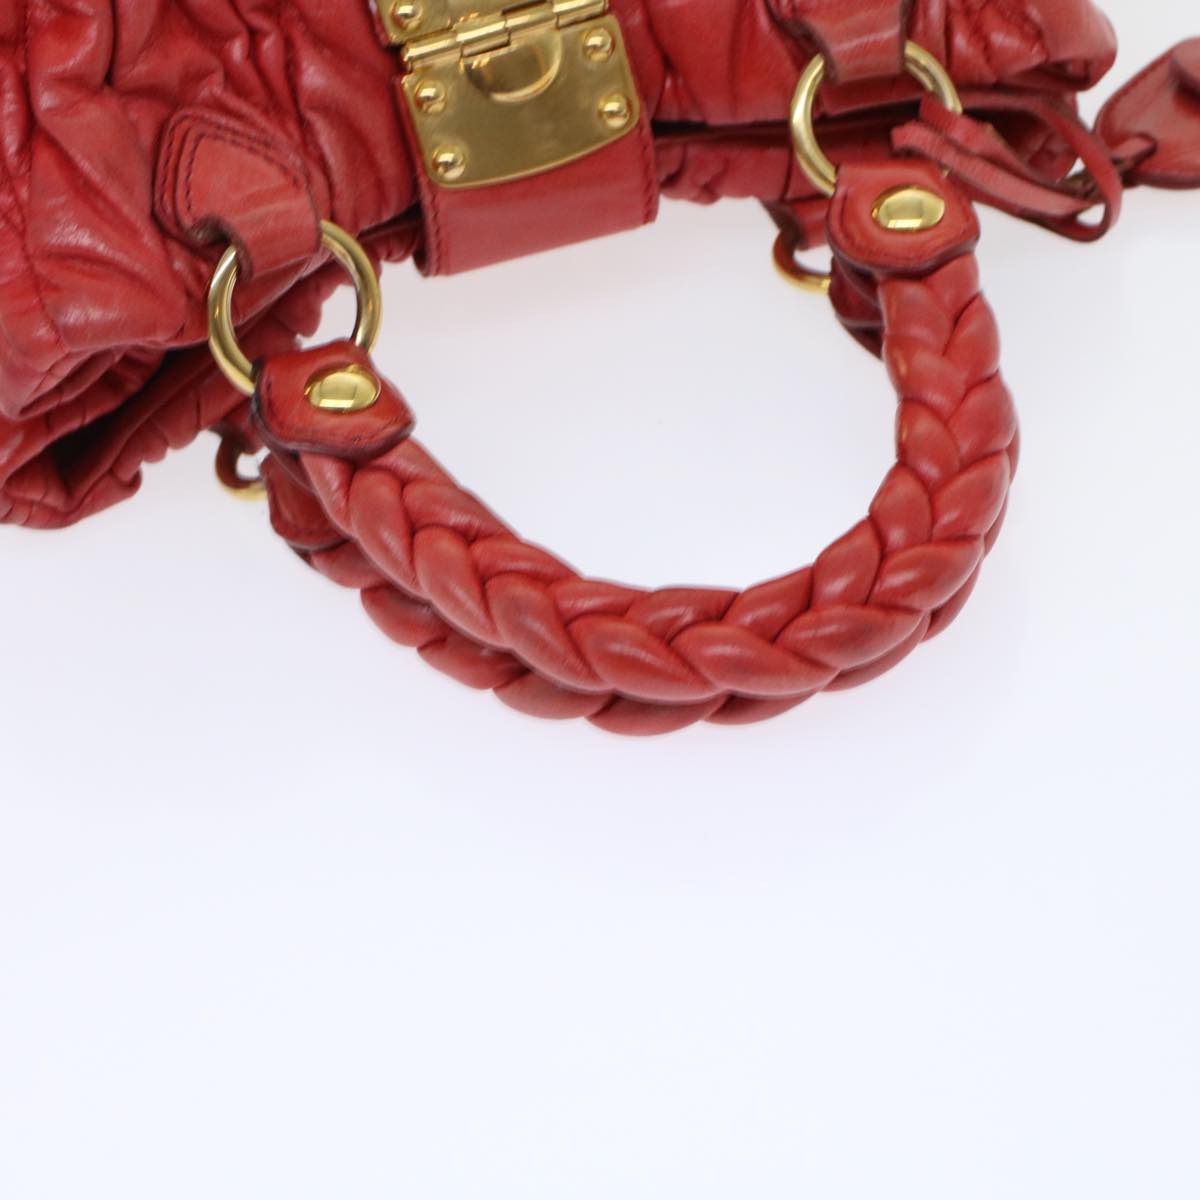 Miu Miu Materasse Hand Bag Leather 2way Shoulder Bag Red Auth yb184